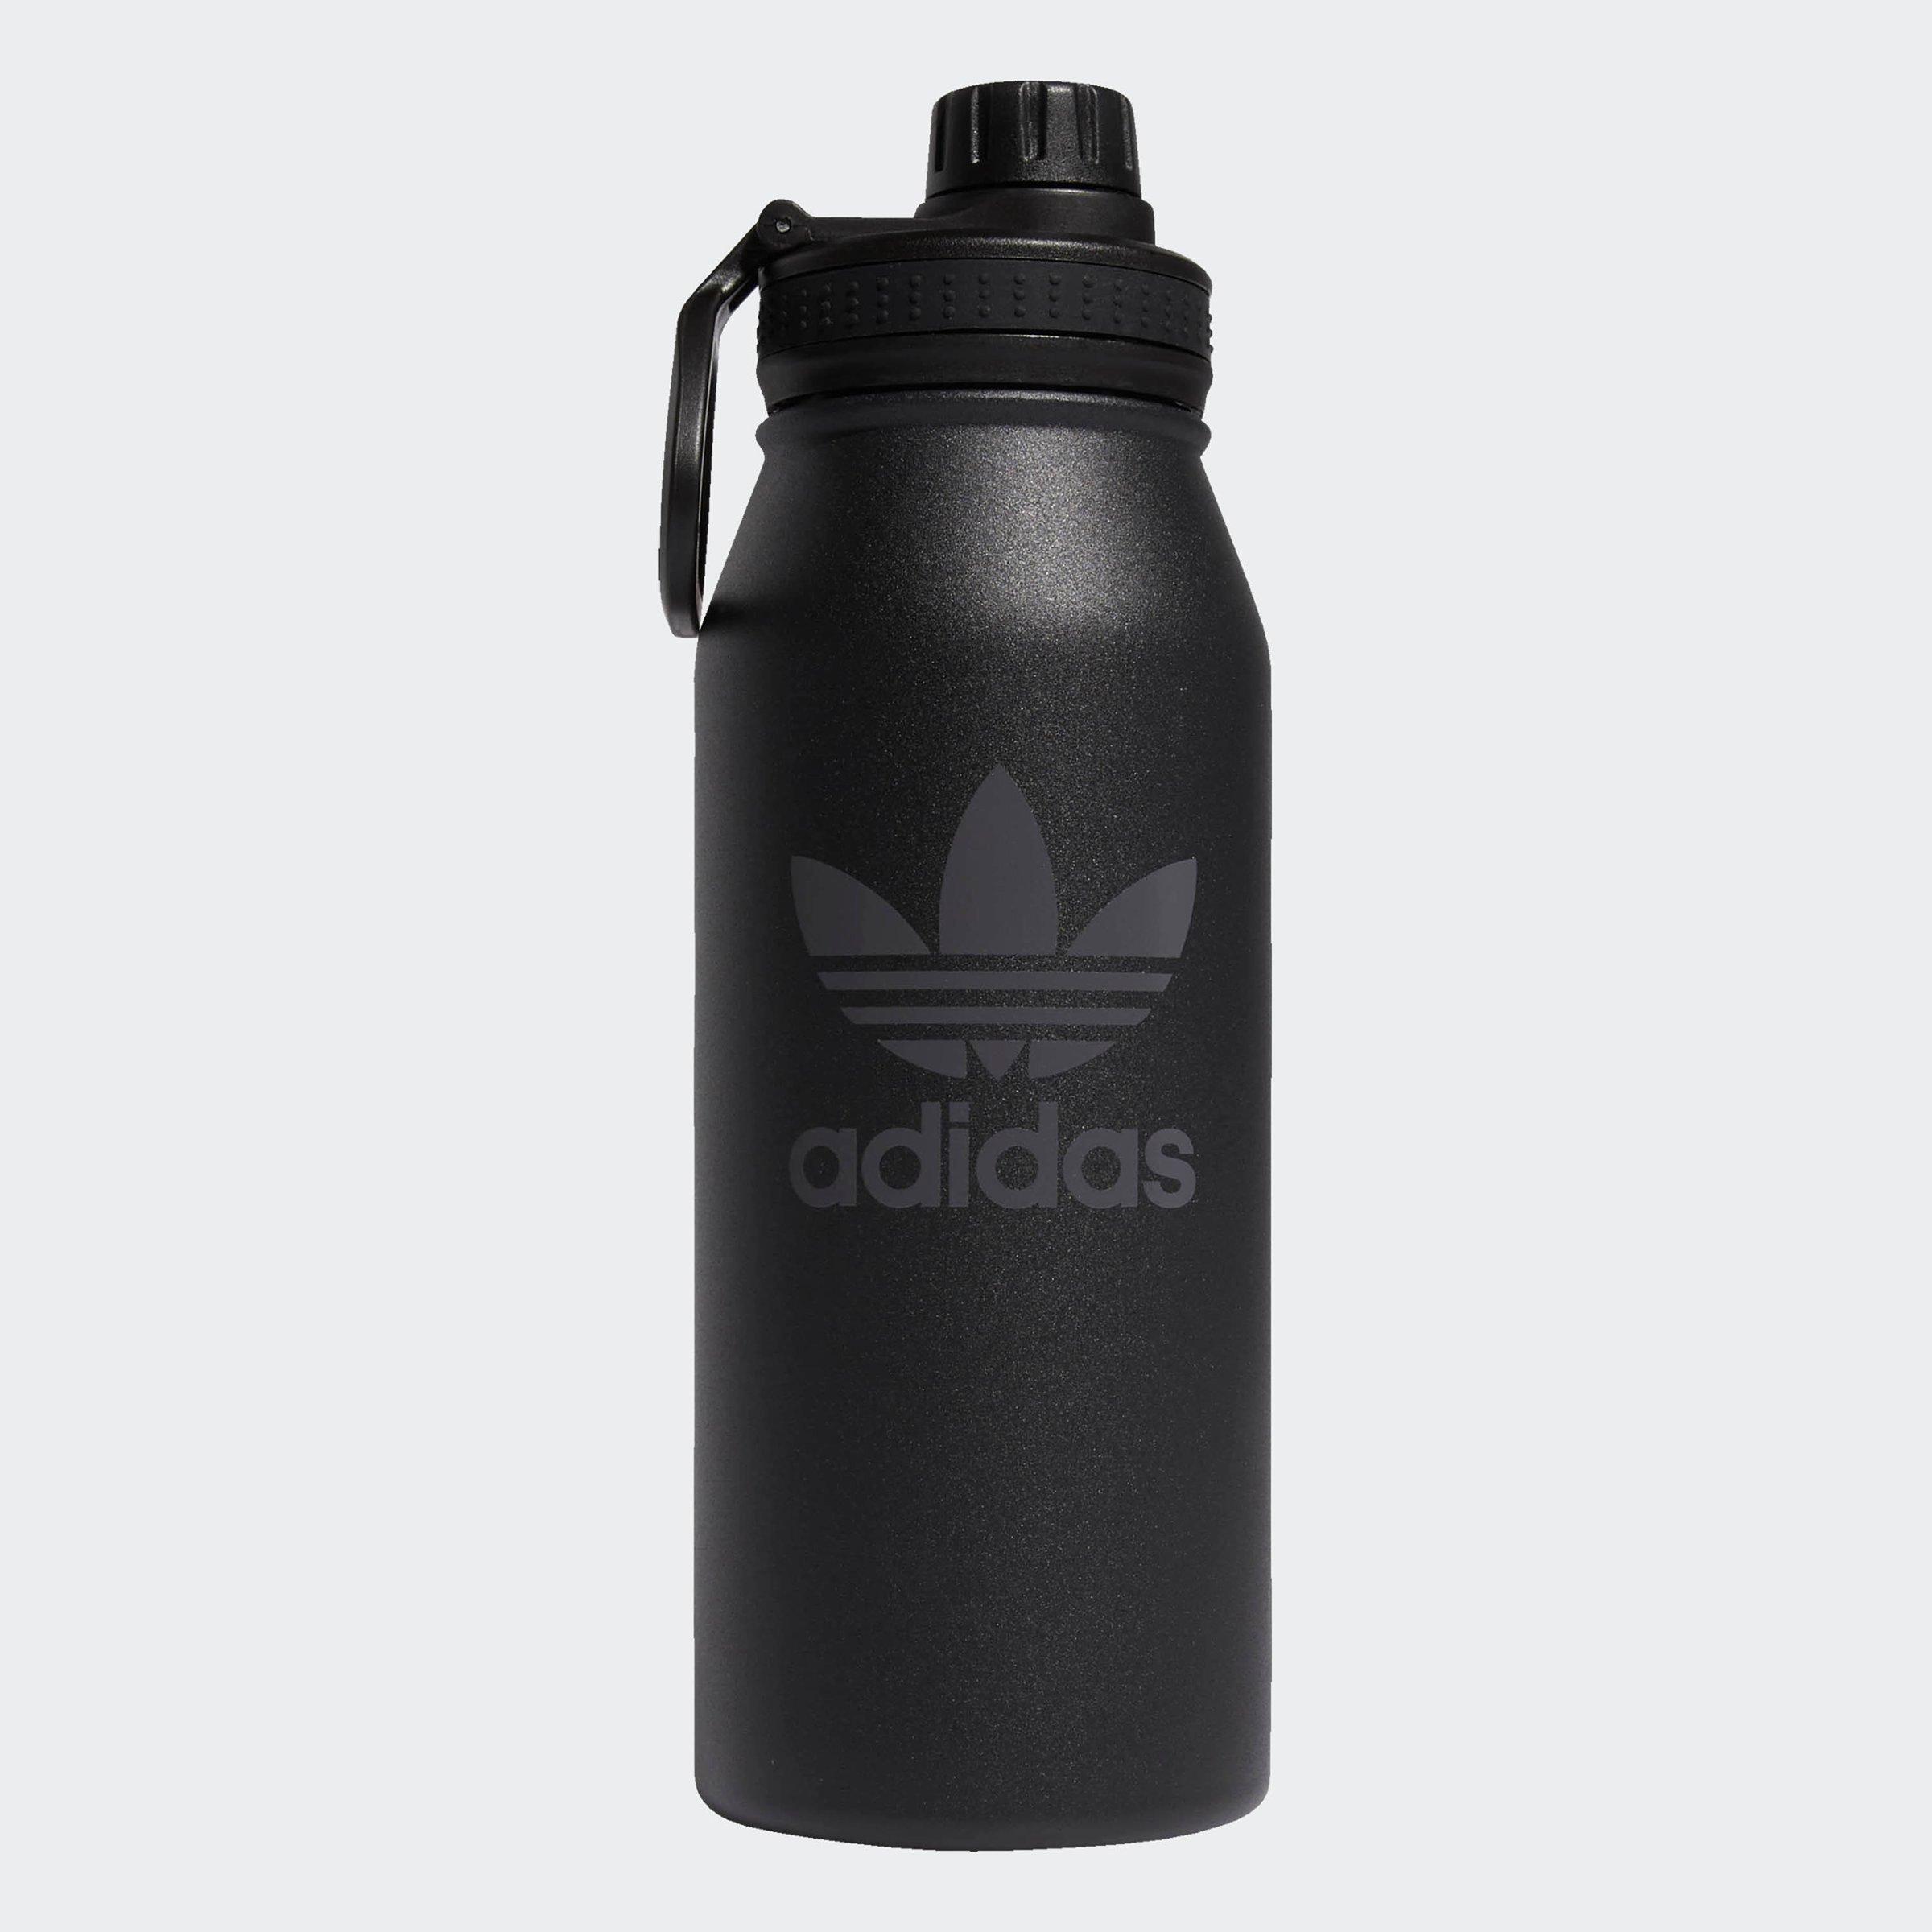 adidas 1l water bottle